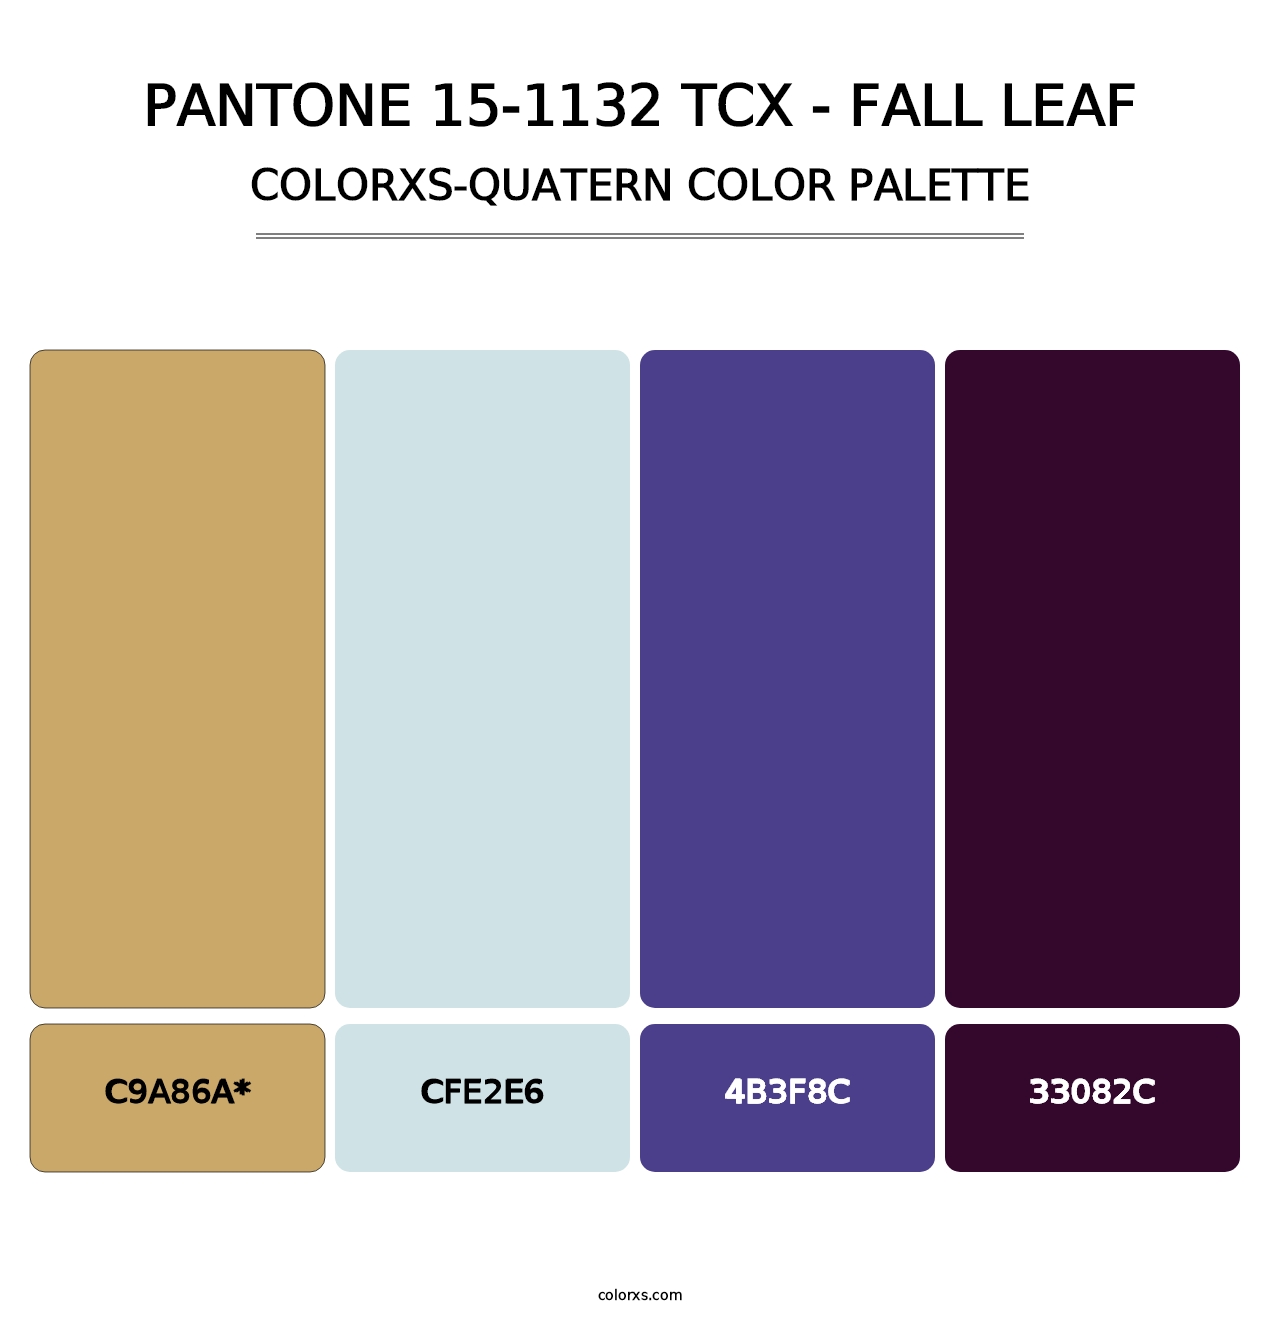 PANTONE 15-1132 TCX - Fall Leaf - Colorxs Quatern Palette